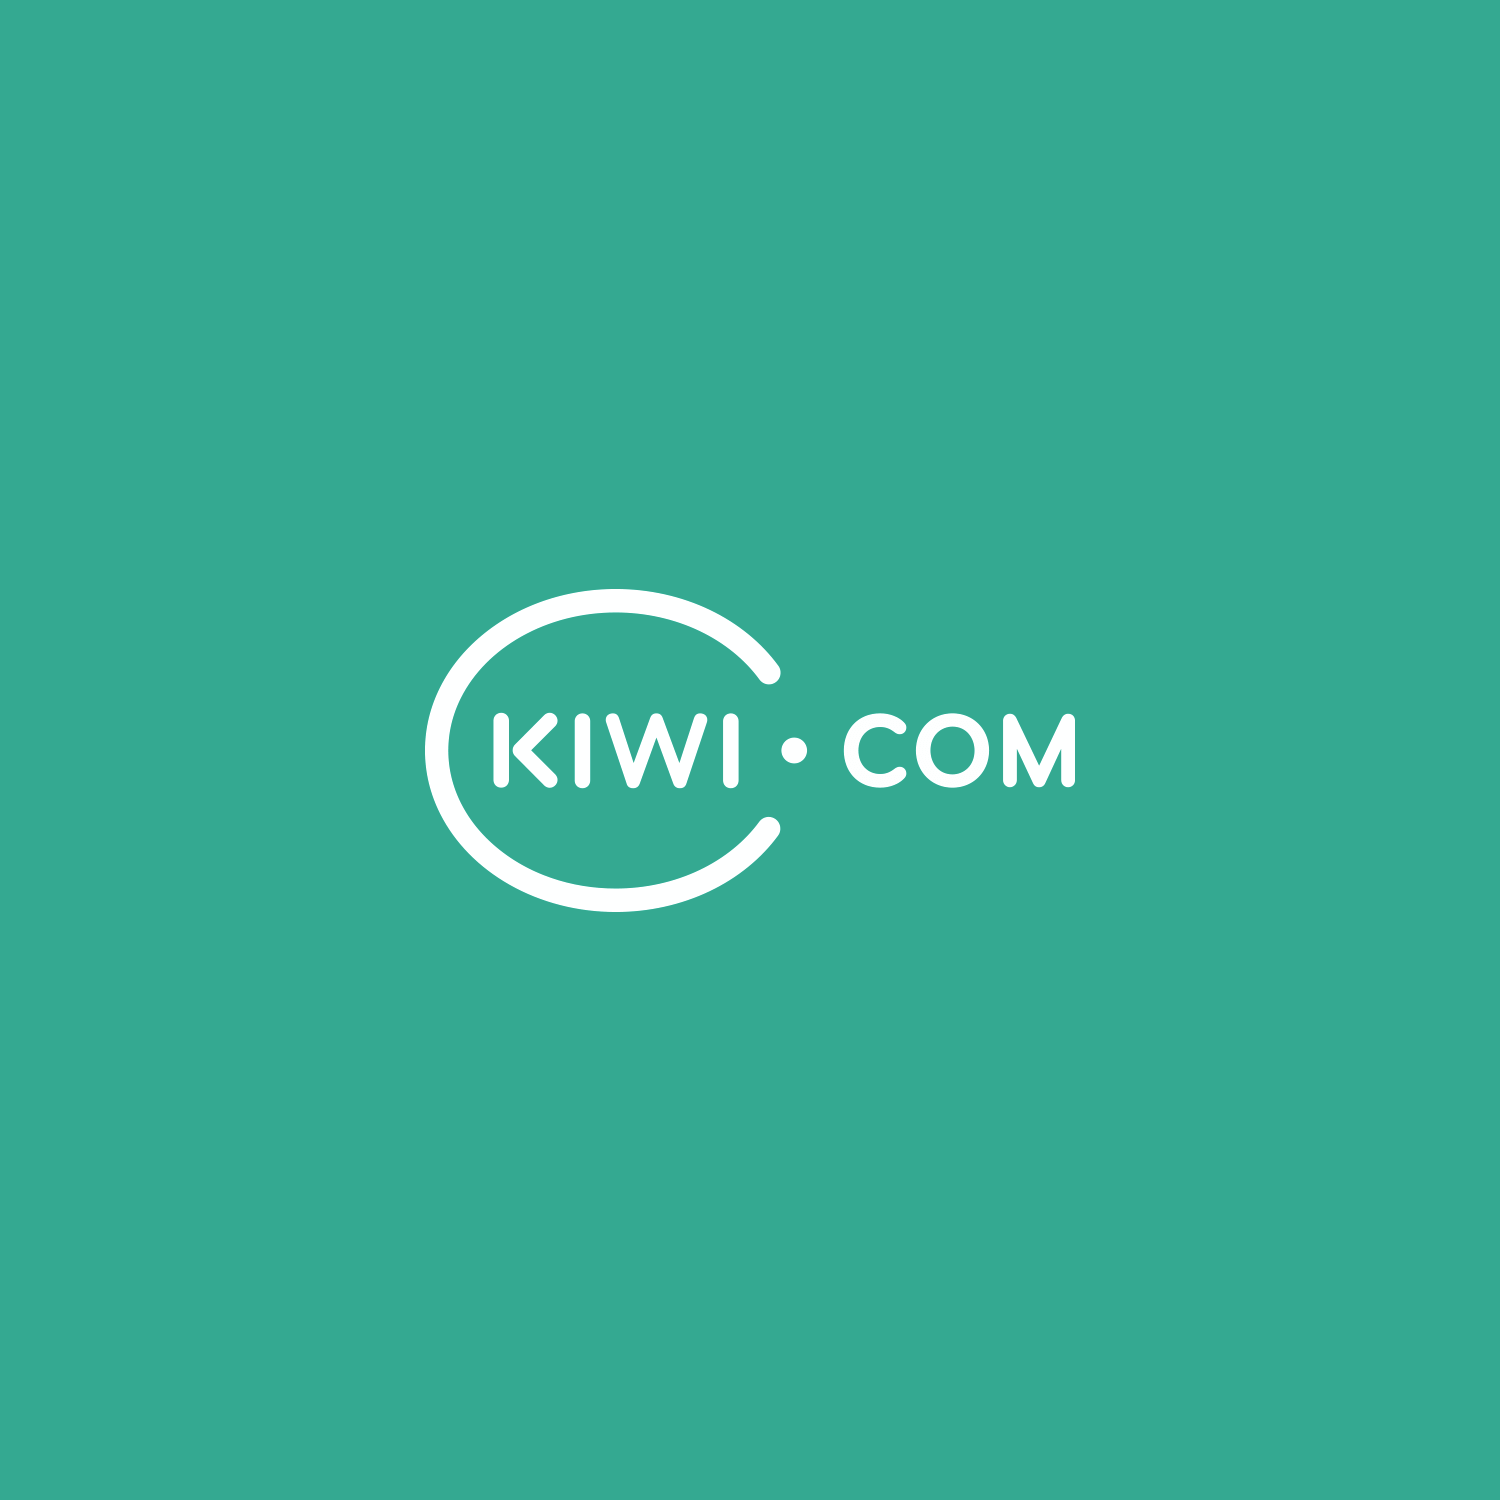 www.kiwi.com